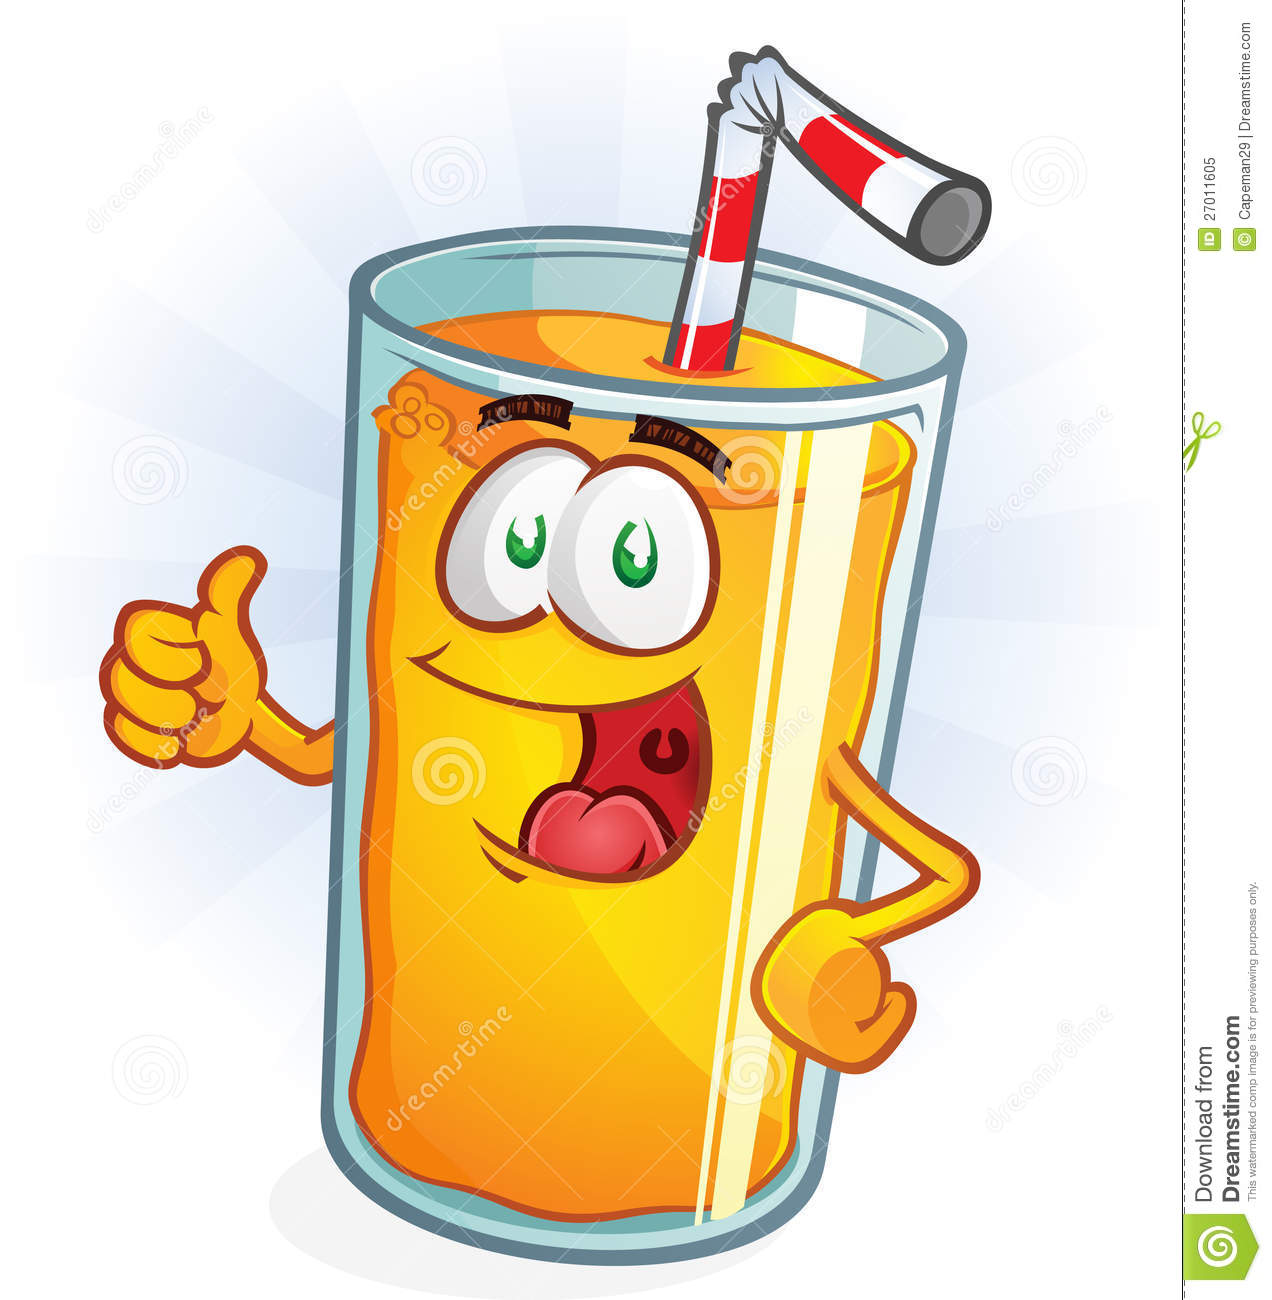 Orange Juice Character Thumbs Up Royalty Free Stock Photo   Image    